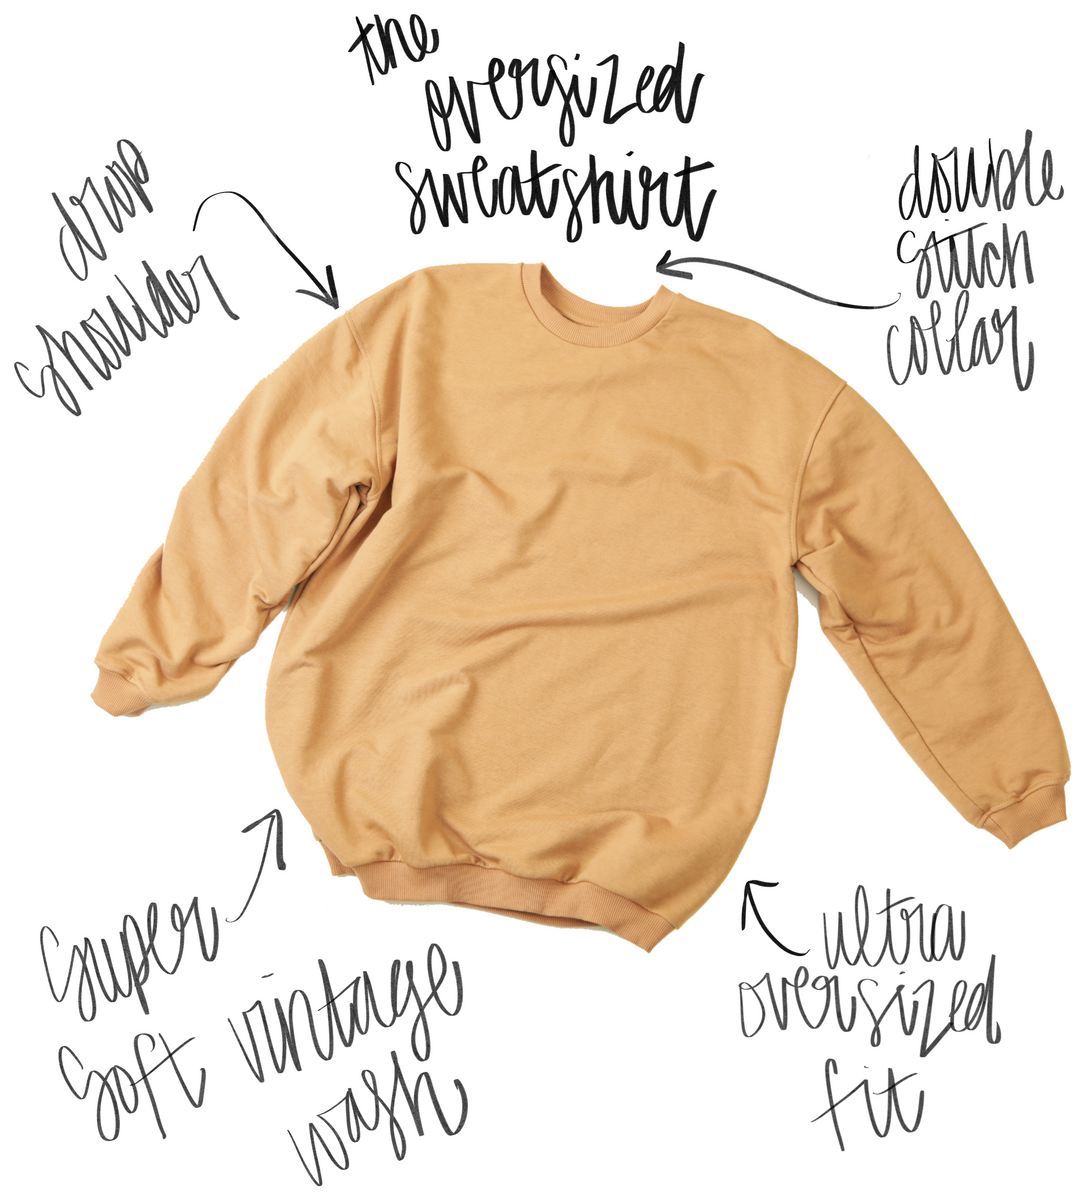 Underground Original Design: Presenting Clara Bow in TTPD Oversized 90's Sweatshirt